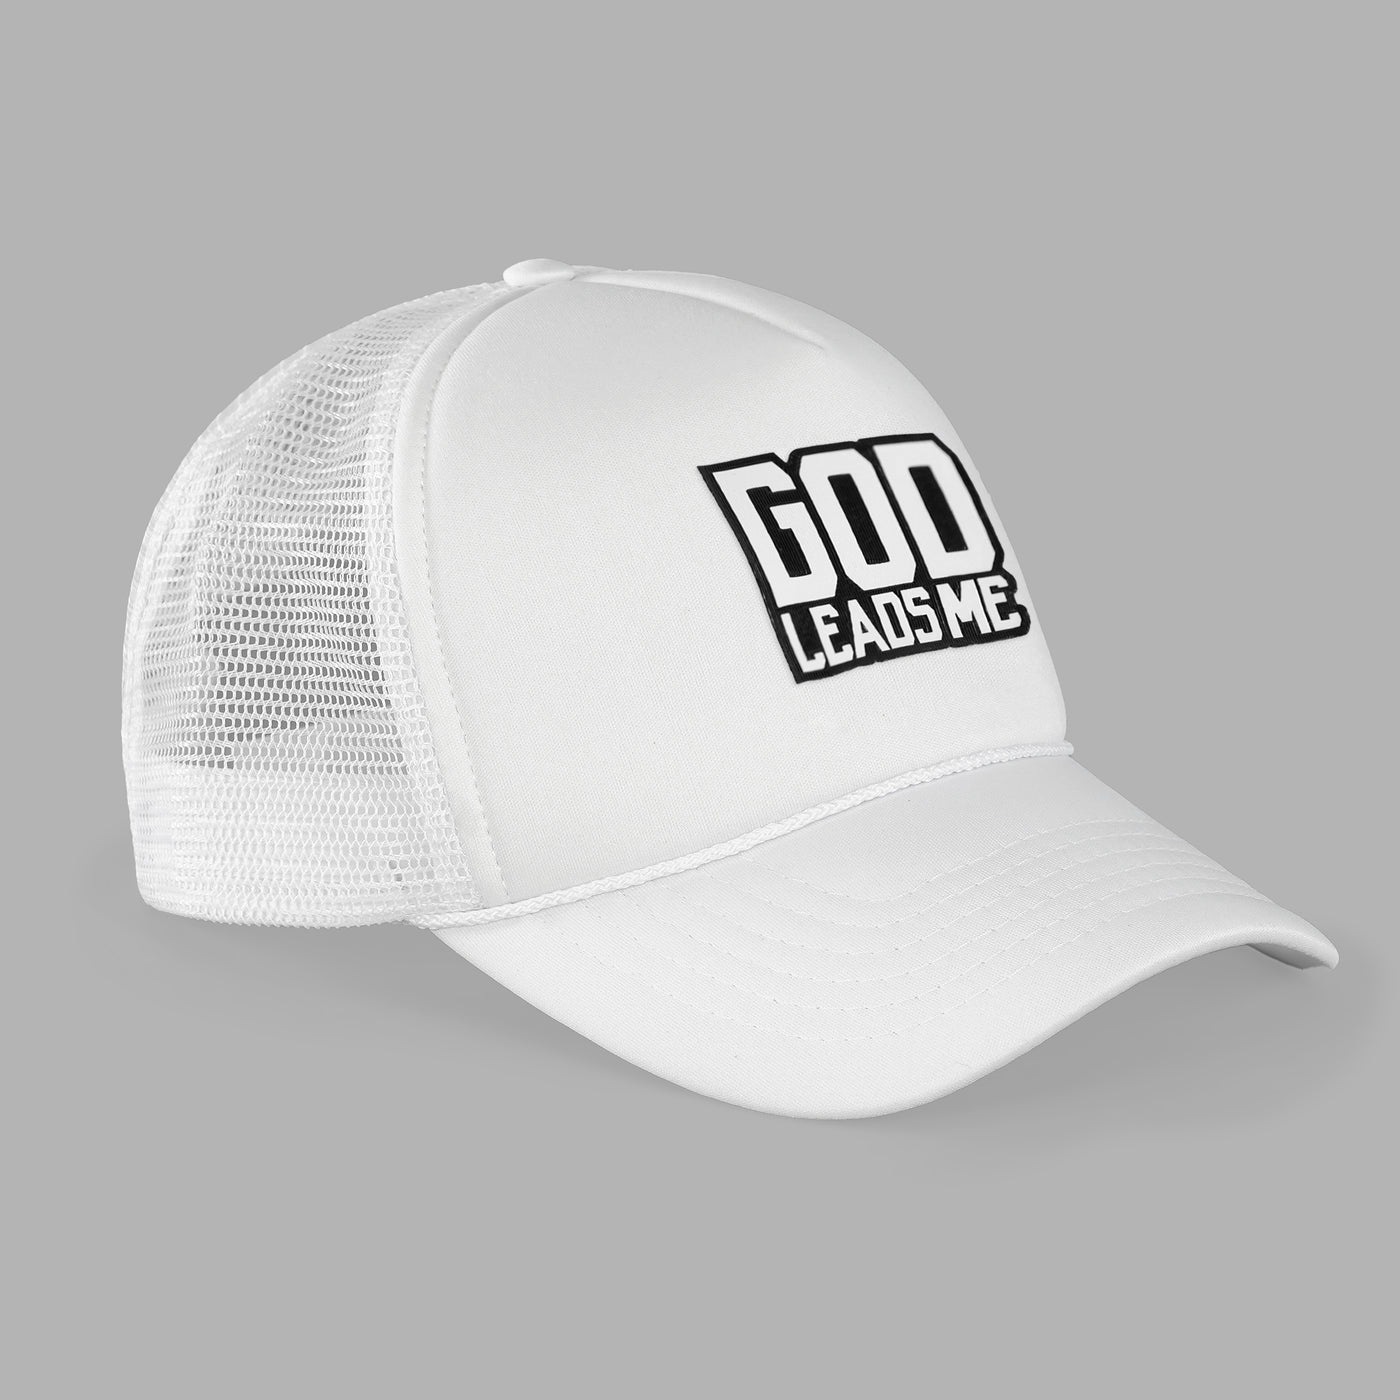 God Leads Me Patch Trucker Hat